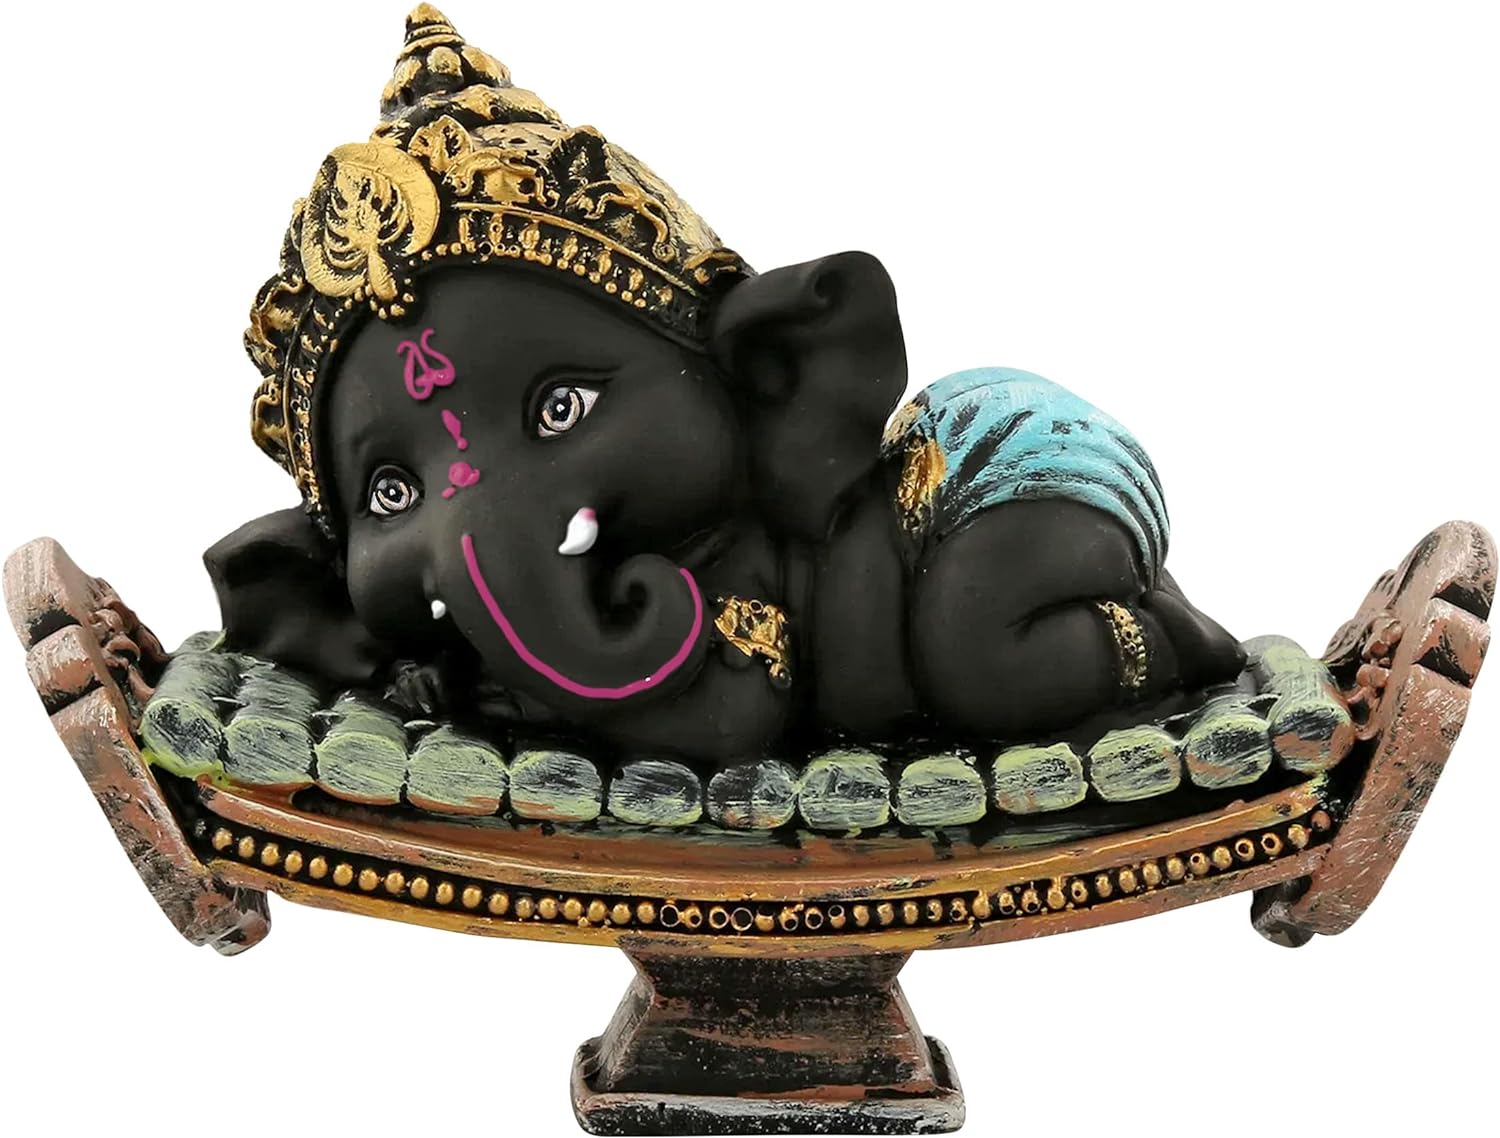 TIED RIBBONS Lord Ganesha Statue | Resin, 4.3 x 6.2 inch | Hindu Elephant God Statue | Buddha Figurine Lying Ganesha Idol for Car Dashboard, Pooja, Home, Table, Desktop | Diwali Decorations for Home